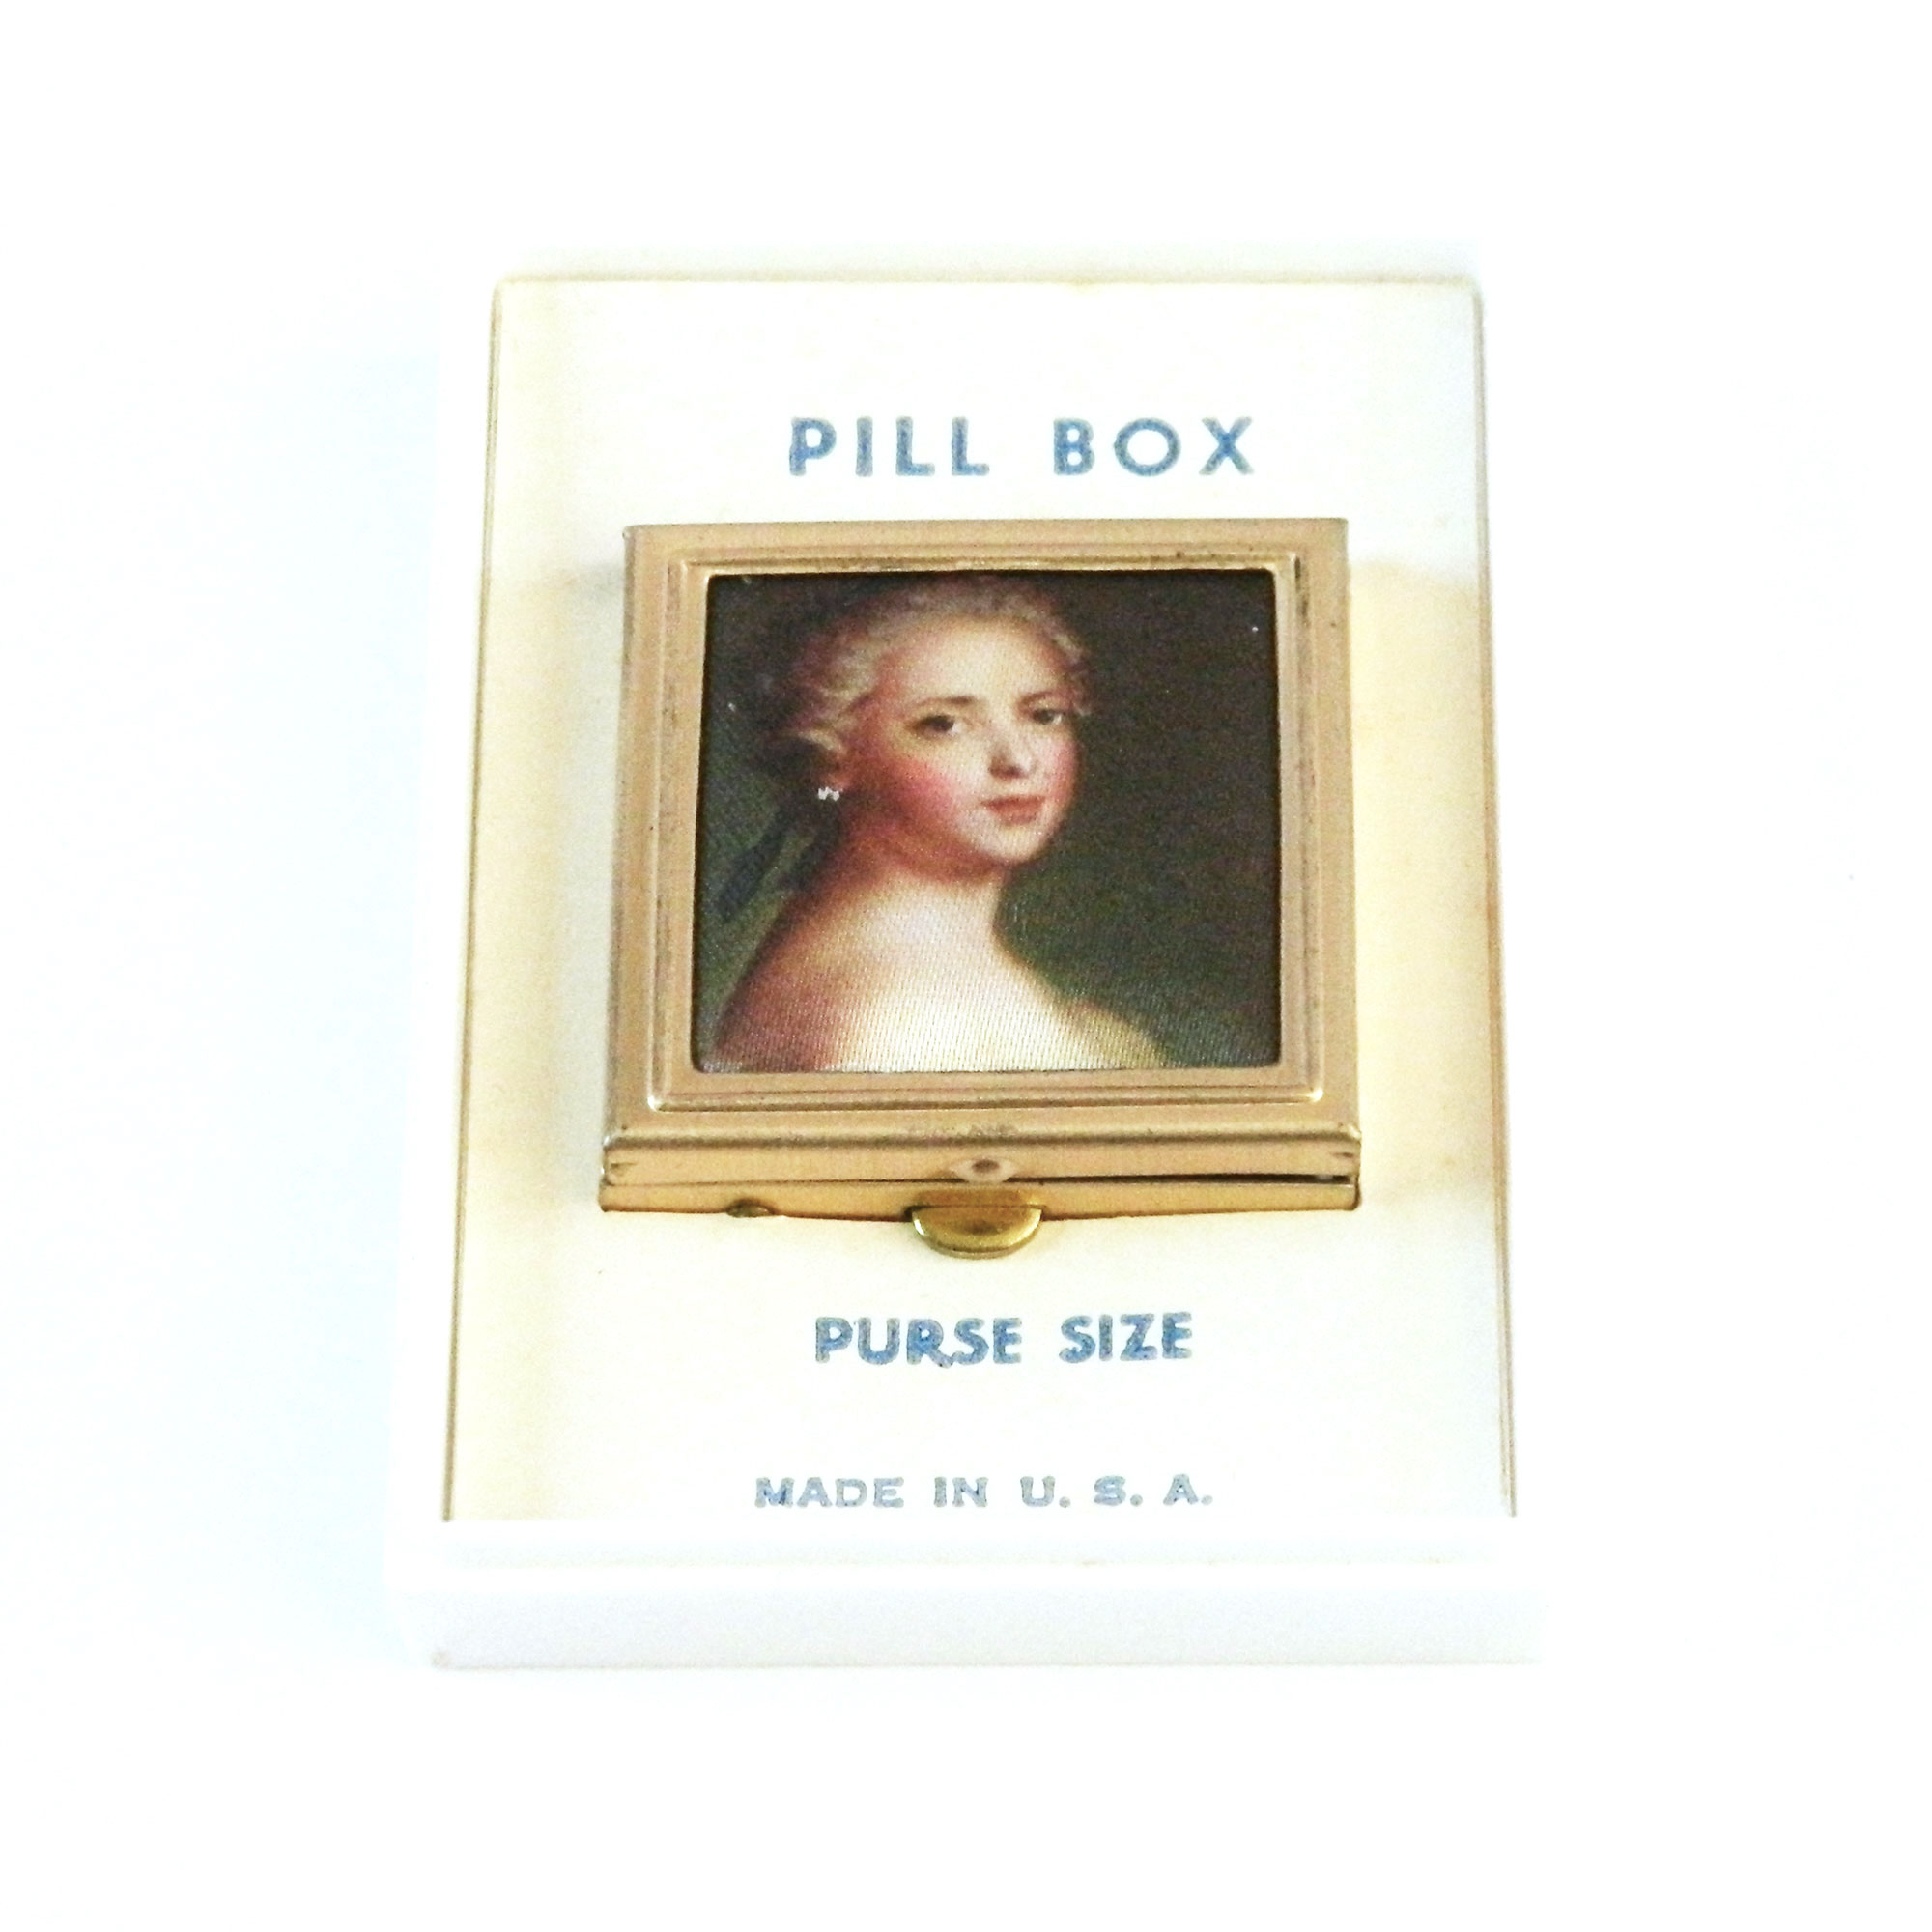 Vintage pill box